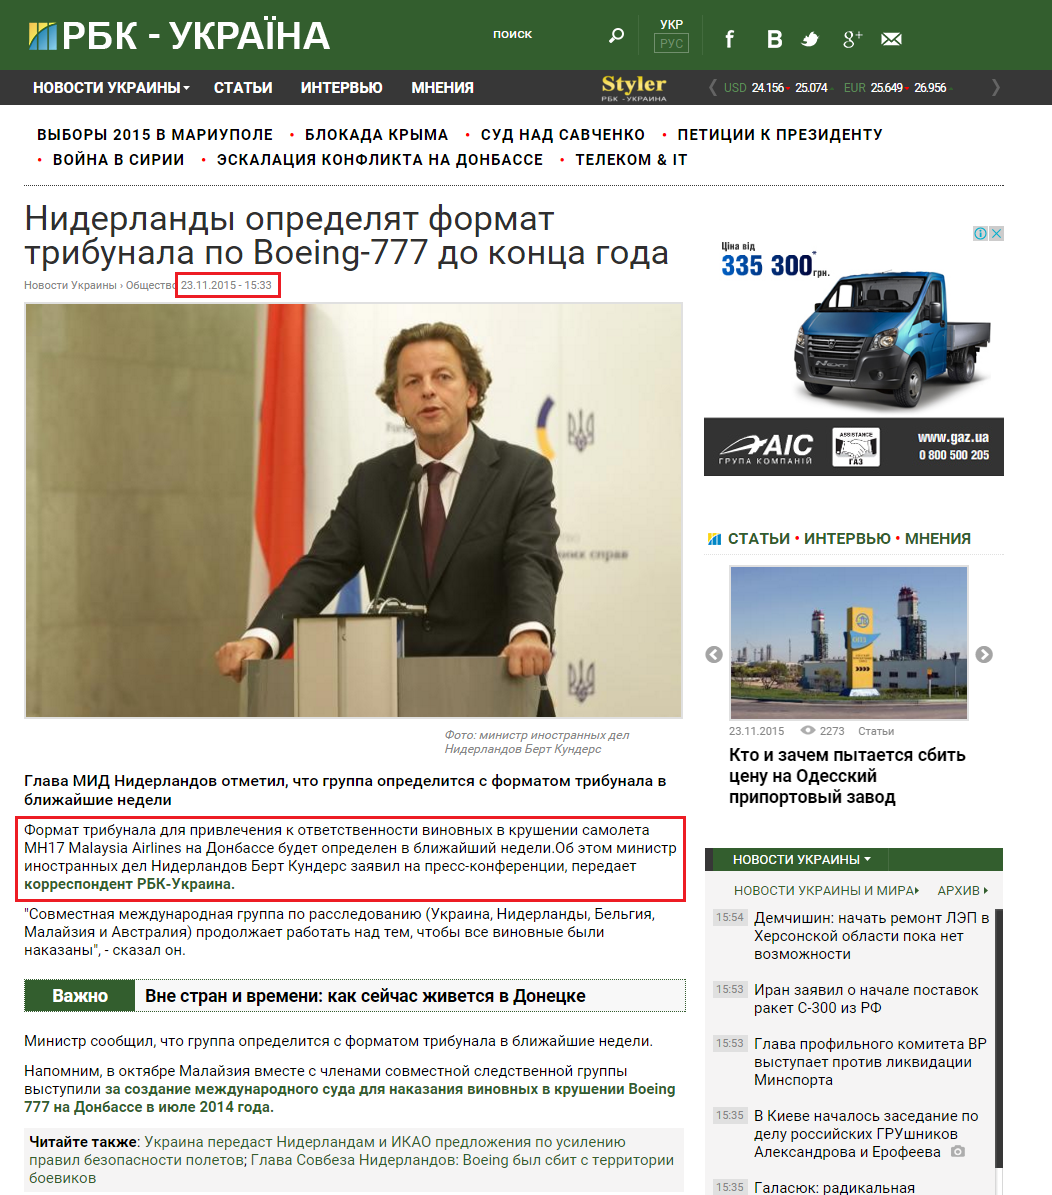 http://www.rbc.ua/rus/news/niderlandy-primut-reshenie-formatu-tribunala-1448285676.html